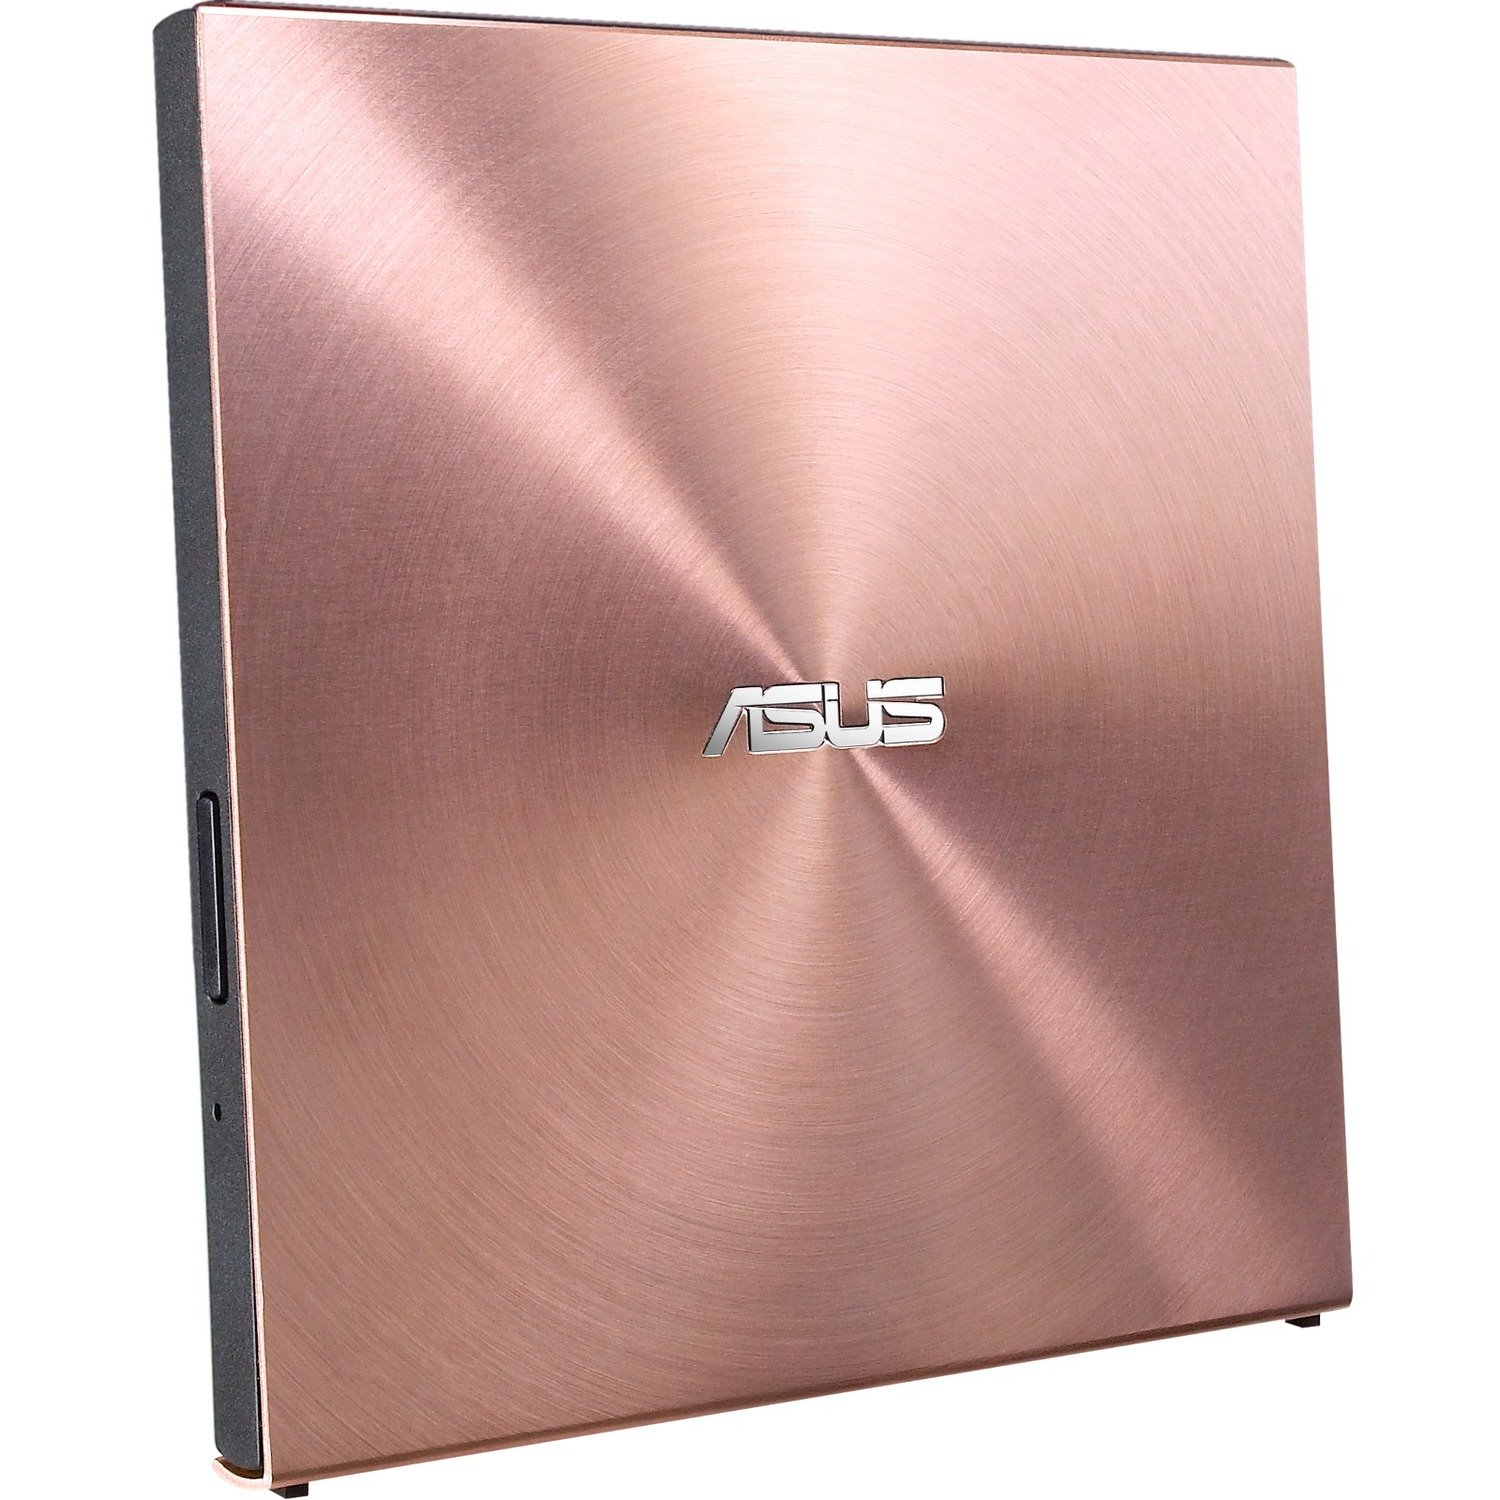 Asus SDRW-08U5S-U DVD-Writer - External - 1 x Pack - Pink